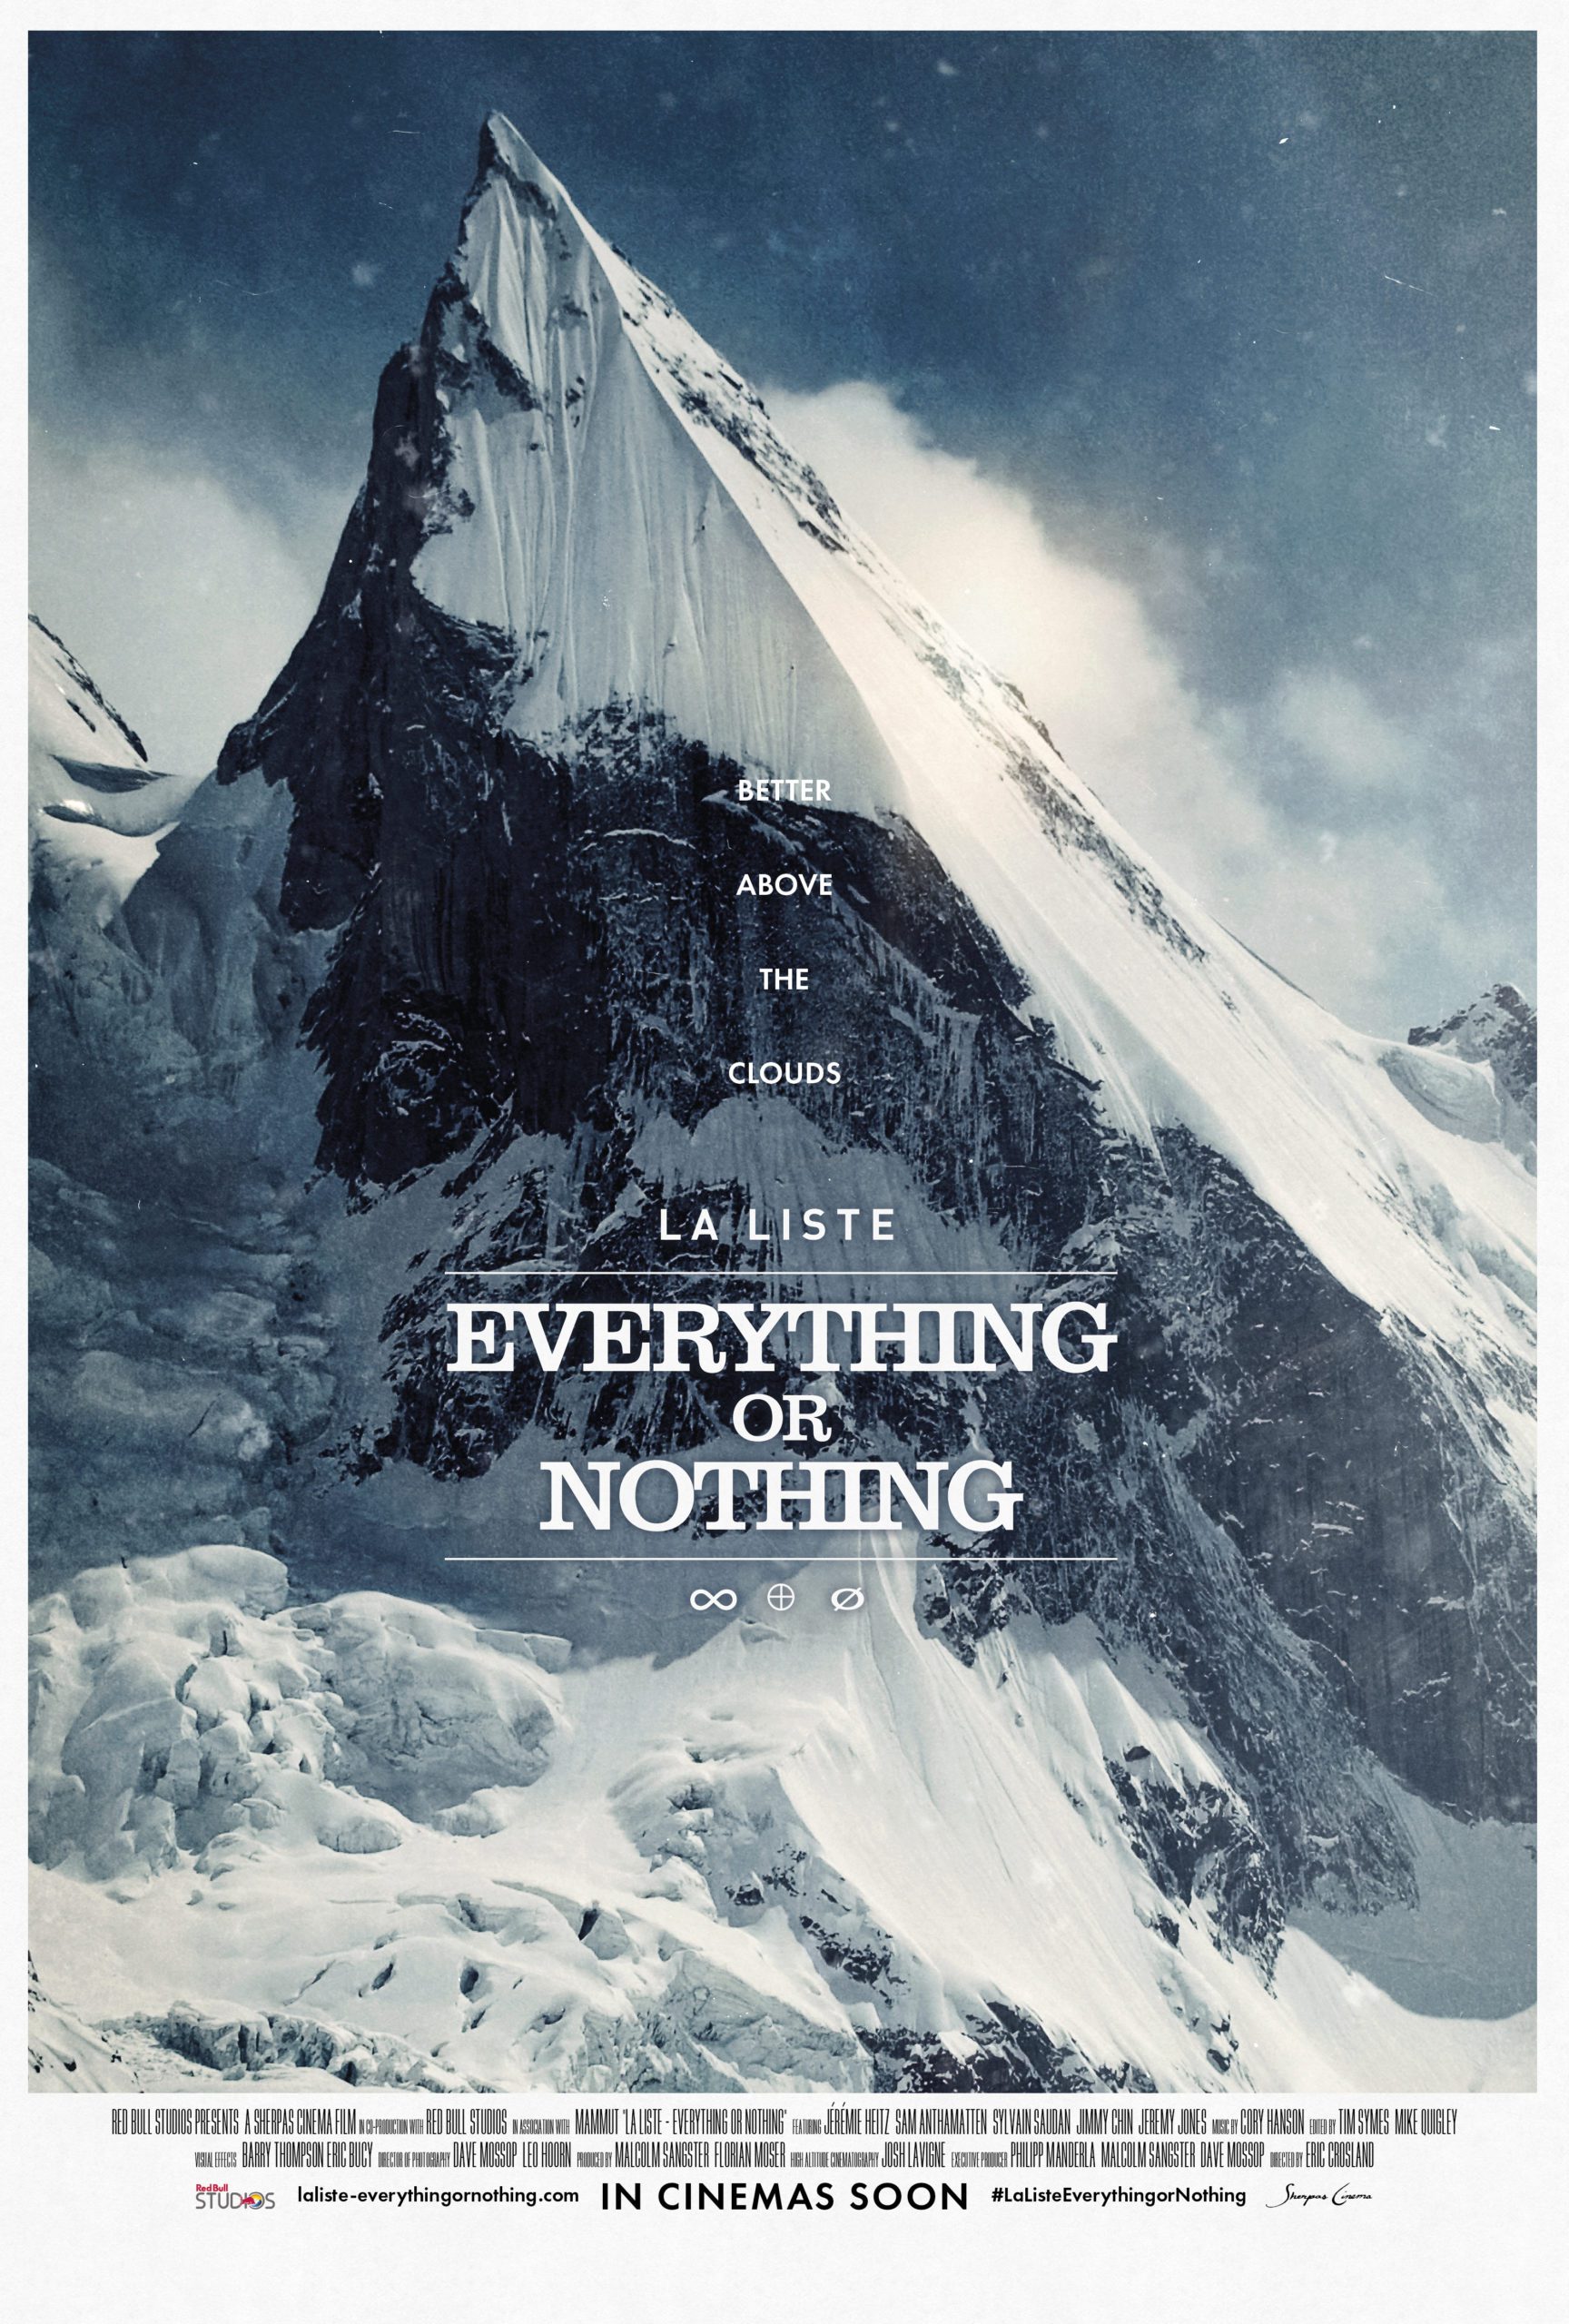 "LA LISTE - EVERYTHING OR NOTHING" mit Extremskifahrer Jérémie Heitz